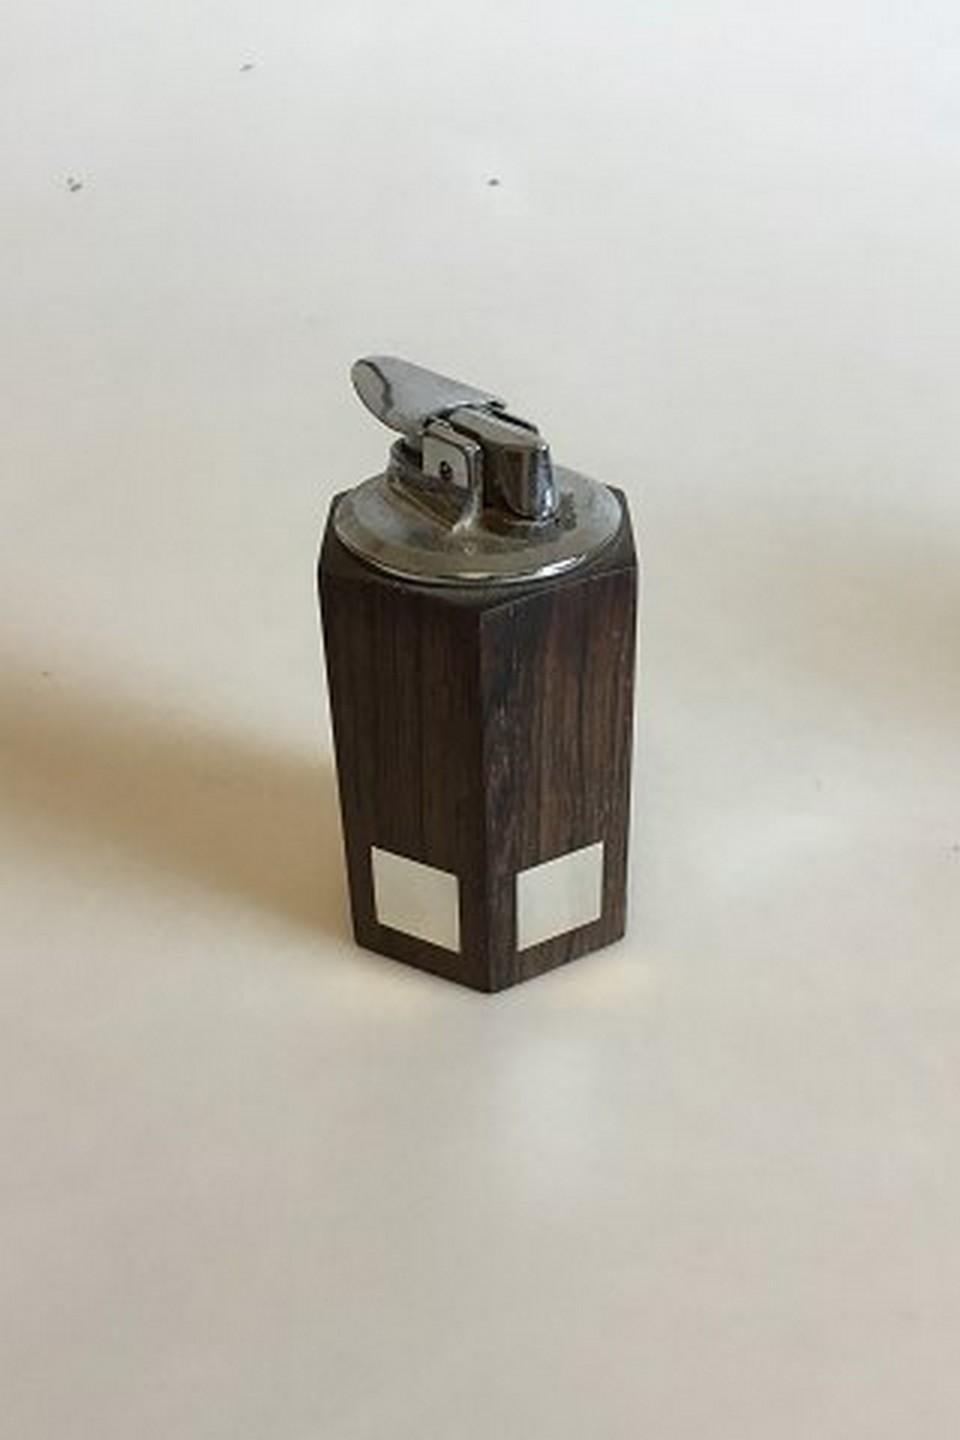 Hans Hansen rosewood and sterling silver hexagonal lighter. Measures: 10 cm / 3 15/16 in.
Item no.: 360869.